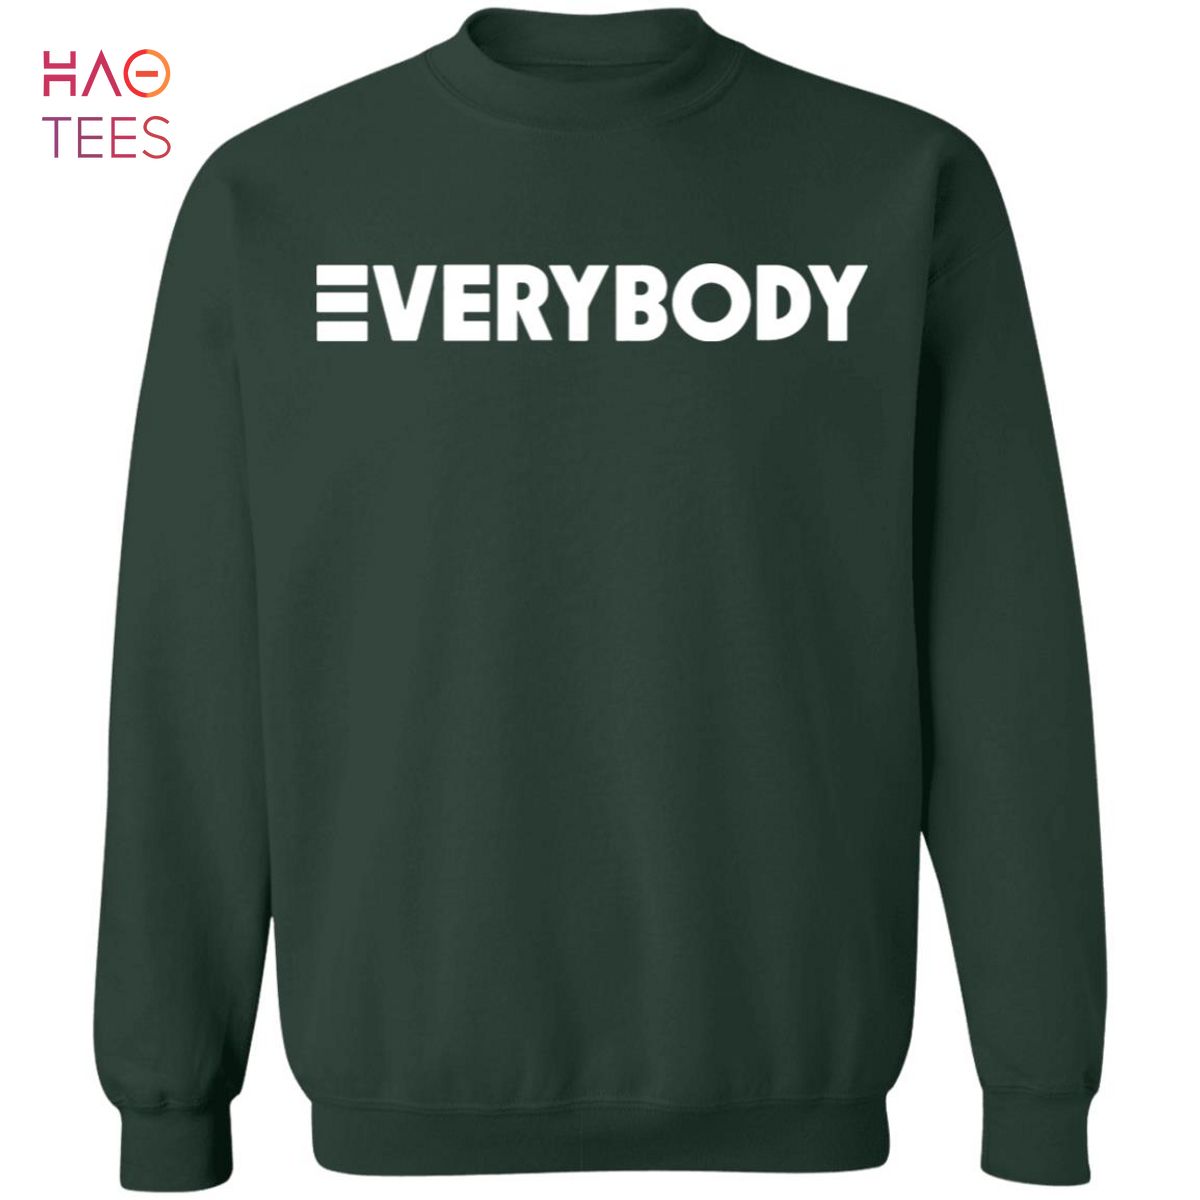 Ledningsevne afspejle Abundantly NEW] Logic Everybody Sweater Dark